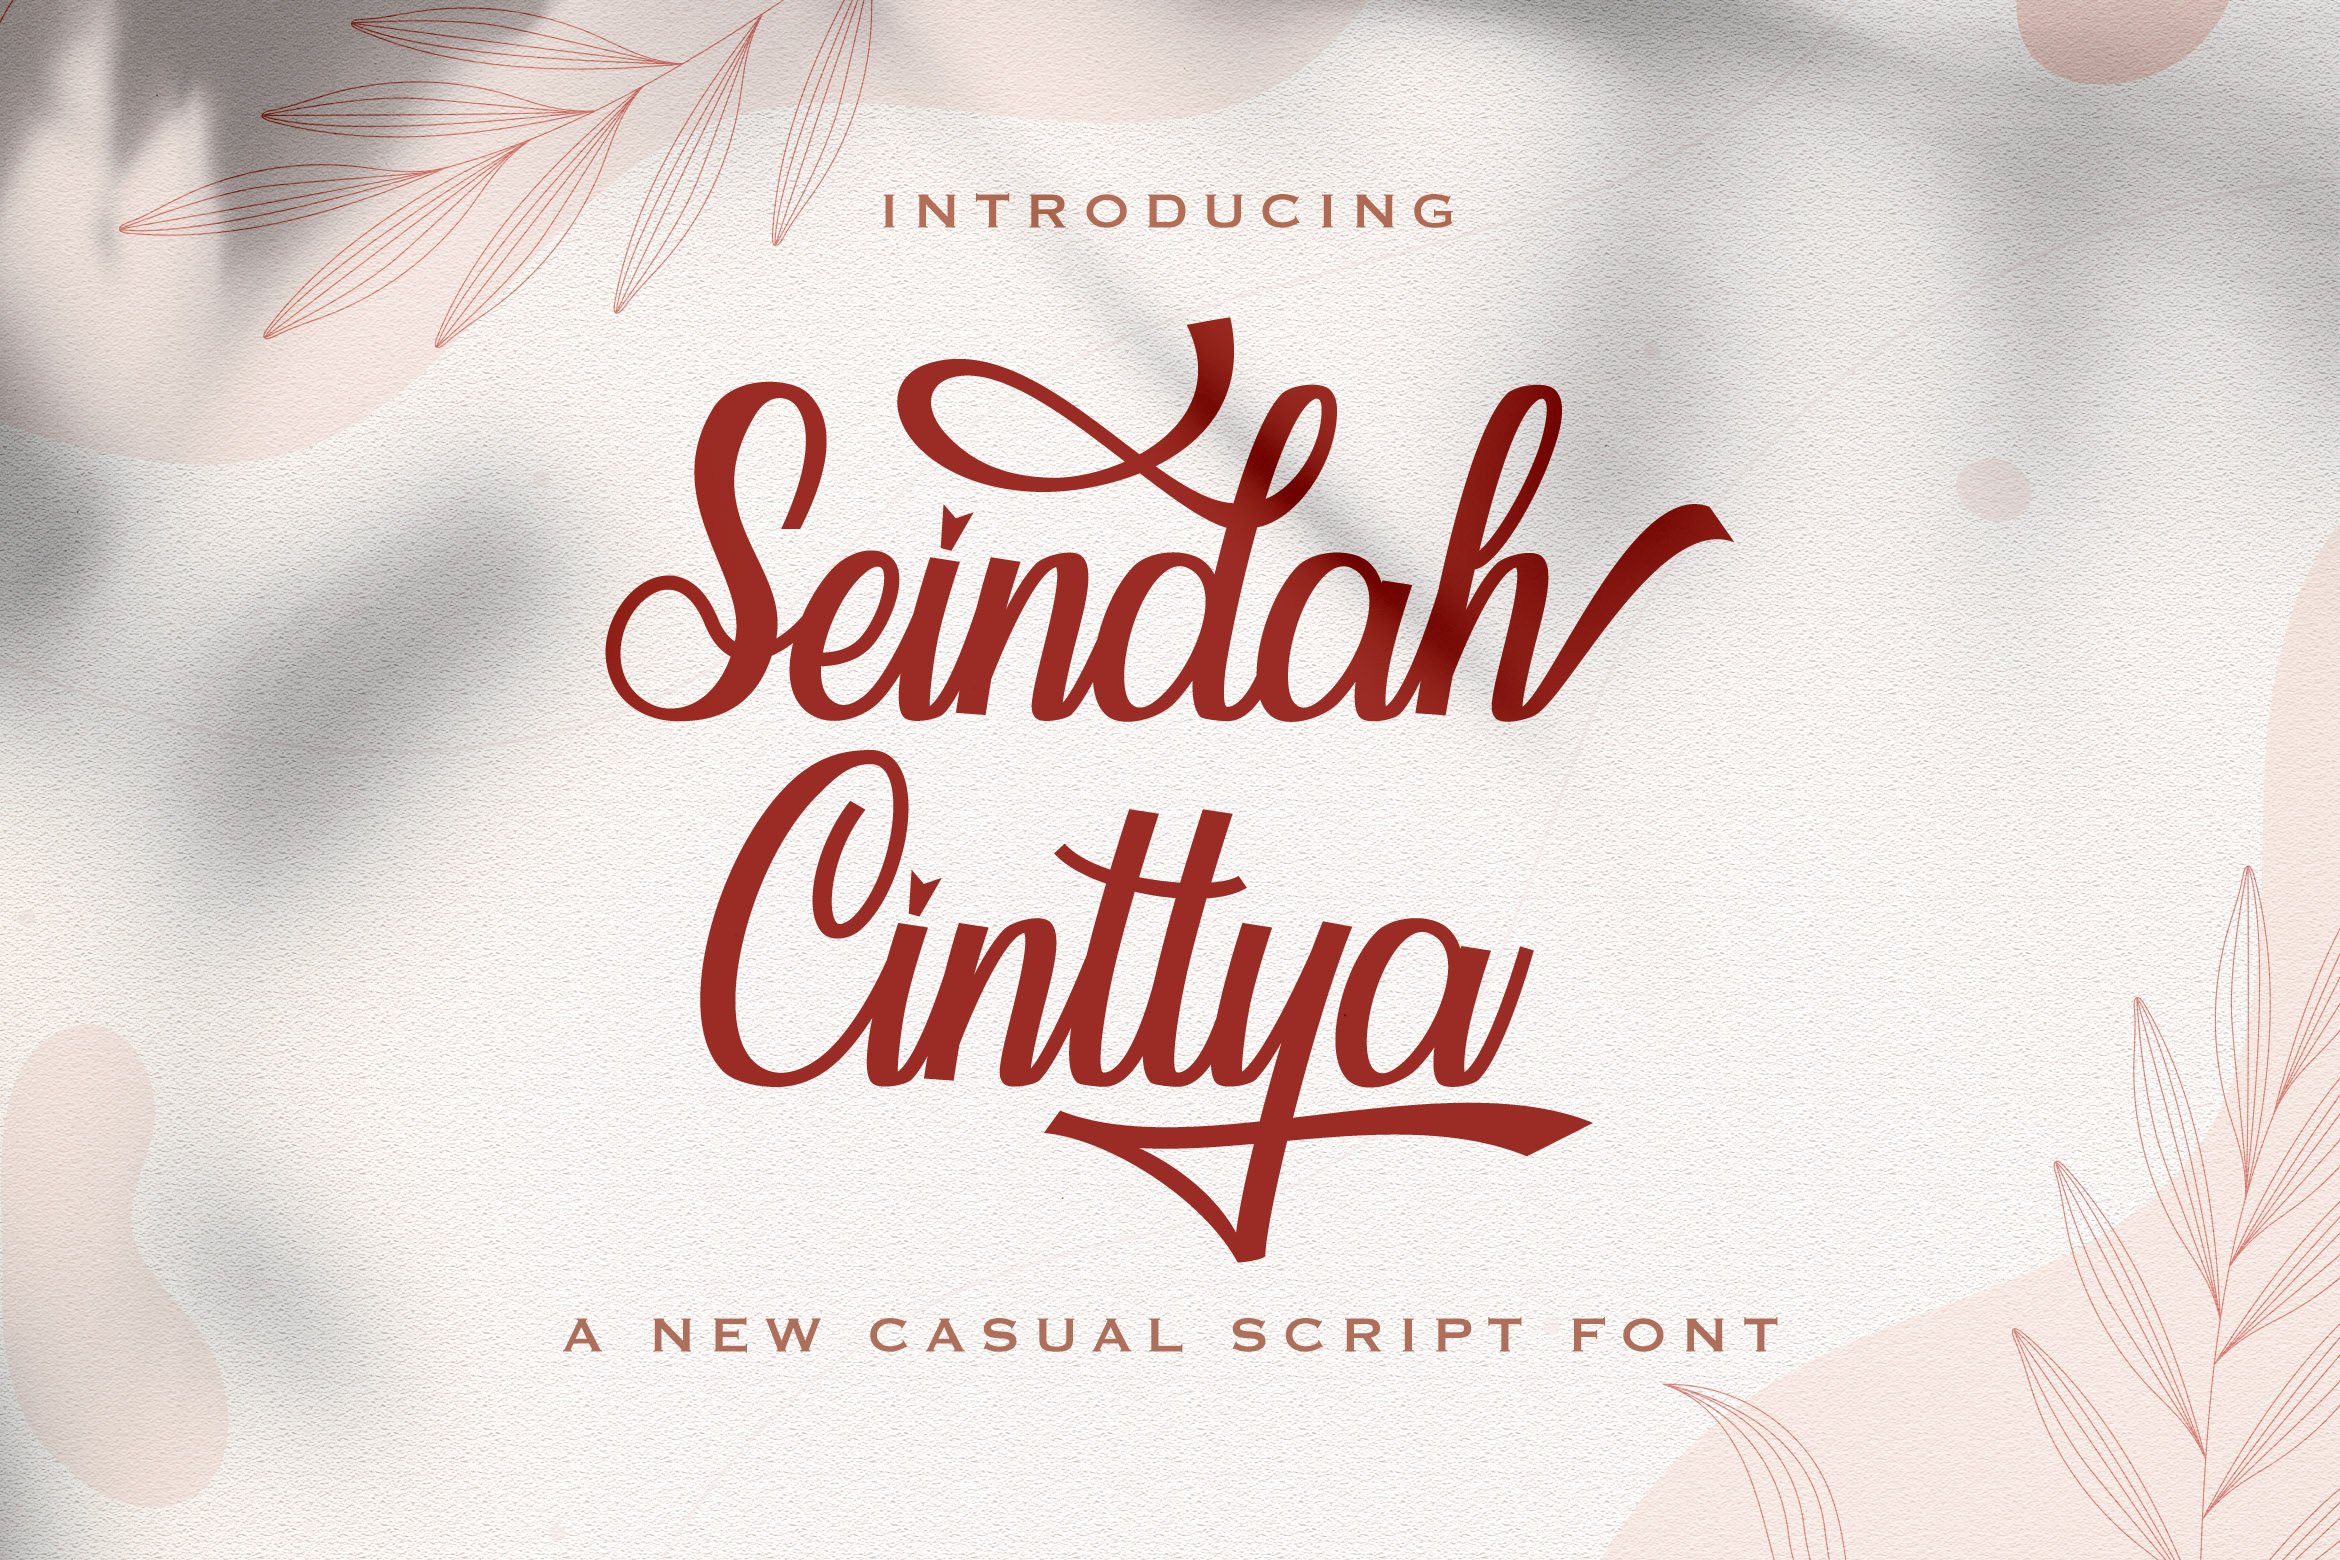 Seindah Cinttya - Casual Script Font cover image.